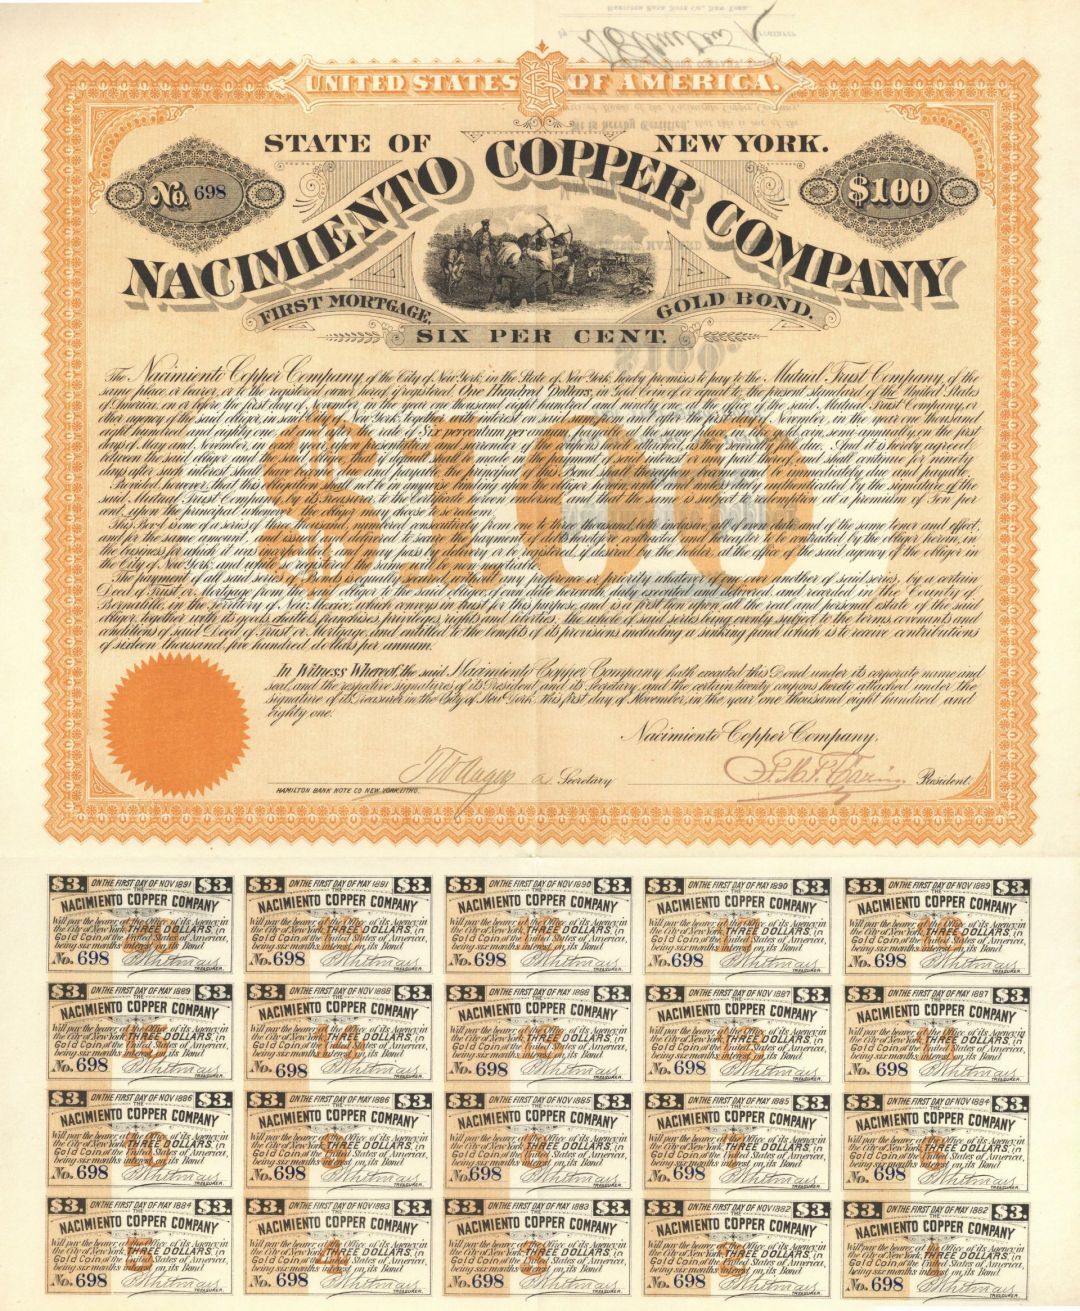 Nacimiento Copper Co. - 1881 dated $100 New Mexico Mining Bond (Uncanceled) - Go